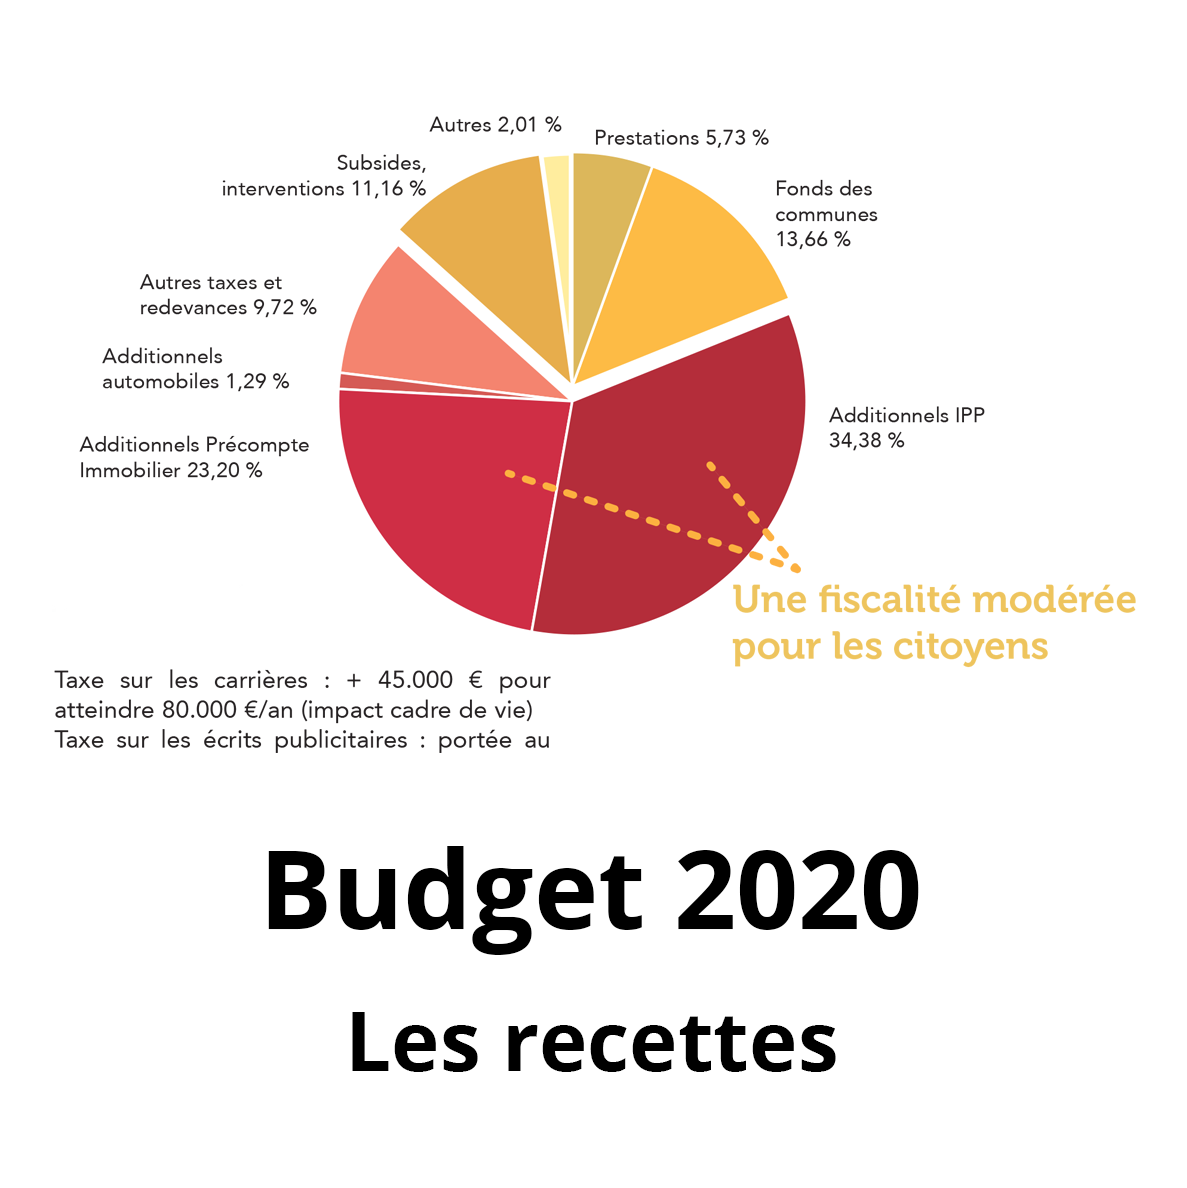 Budget 2020 - Recettes